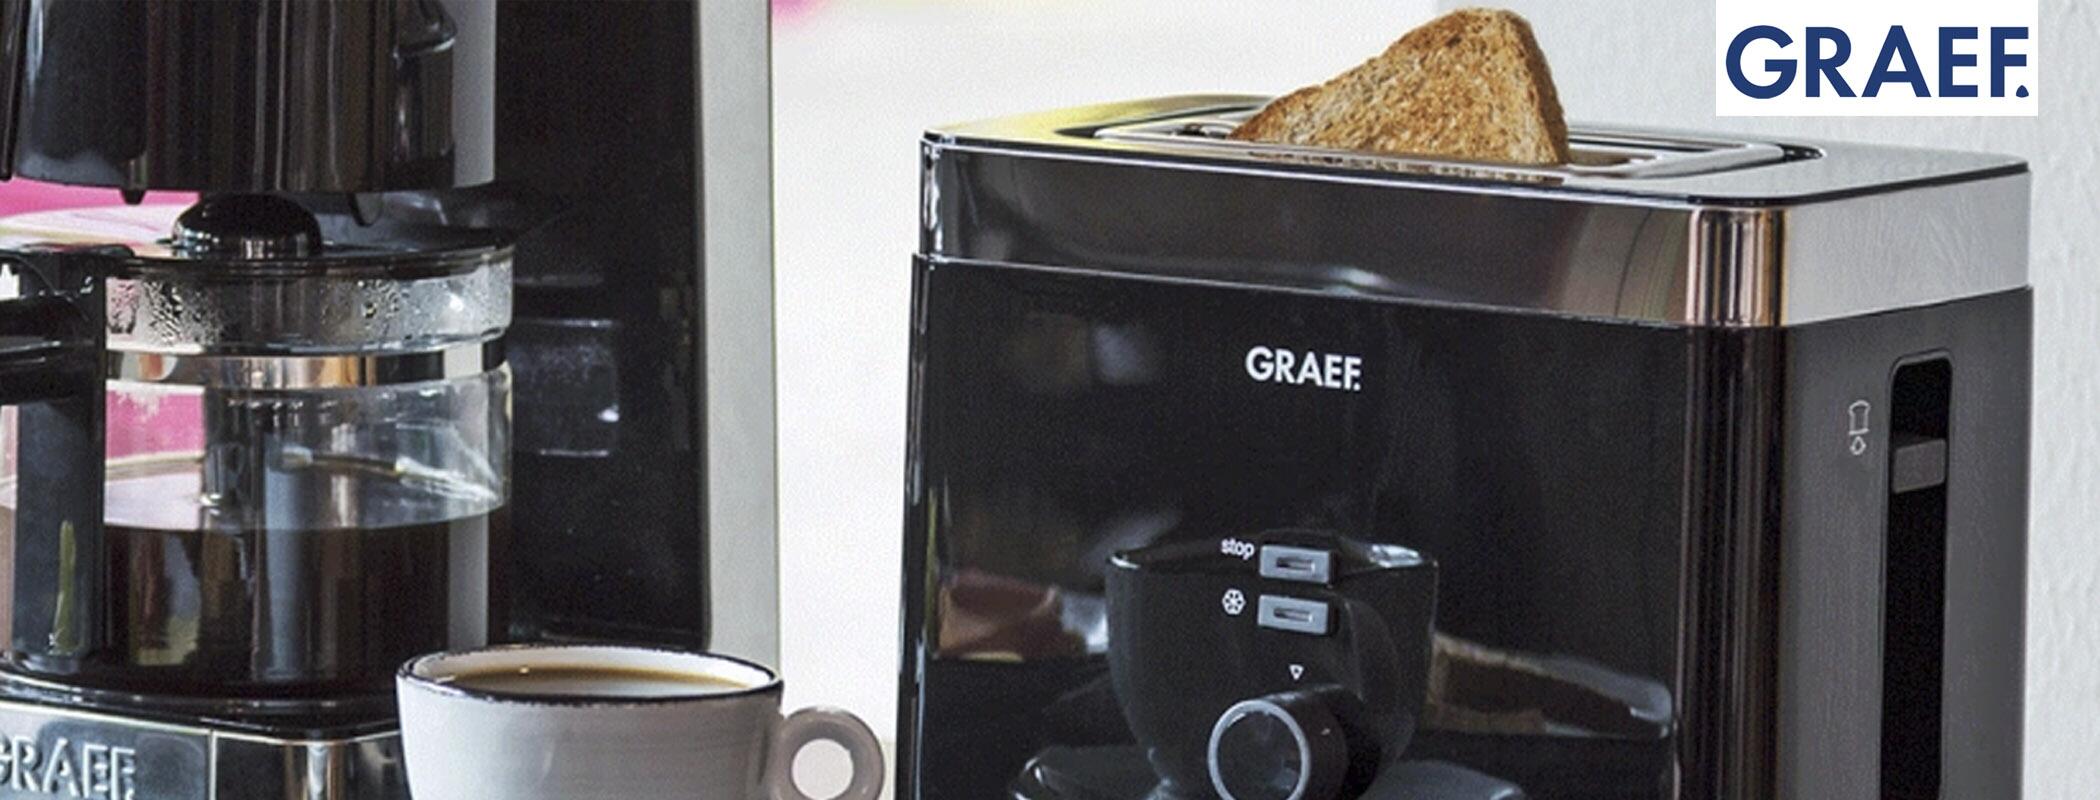 Graef Toaster